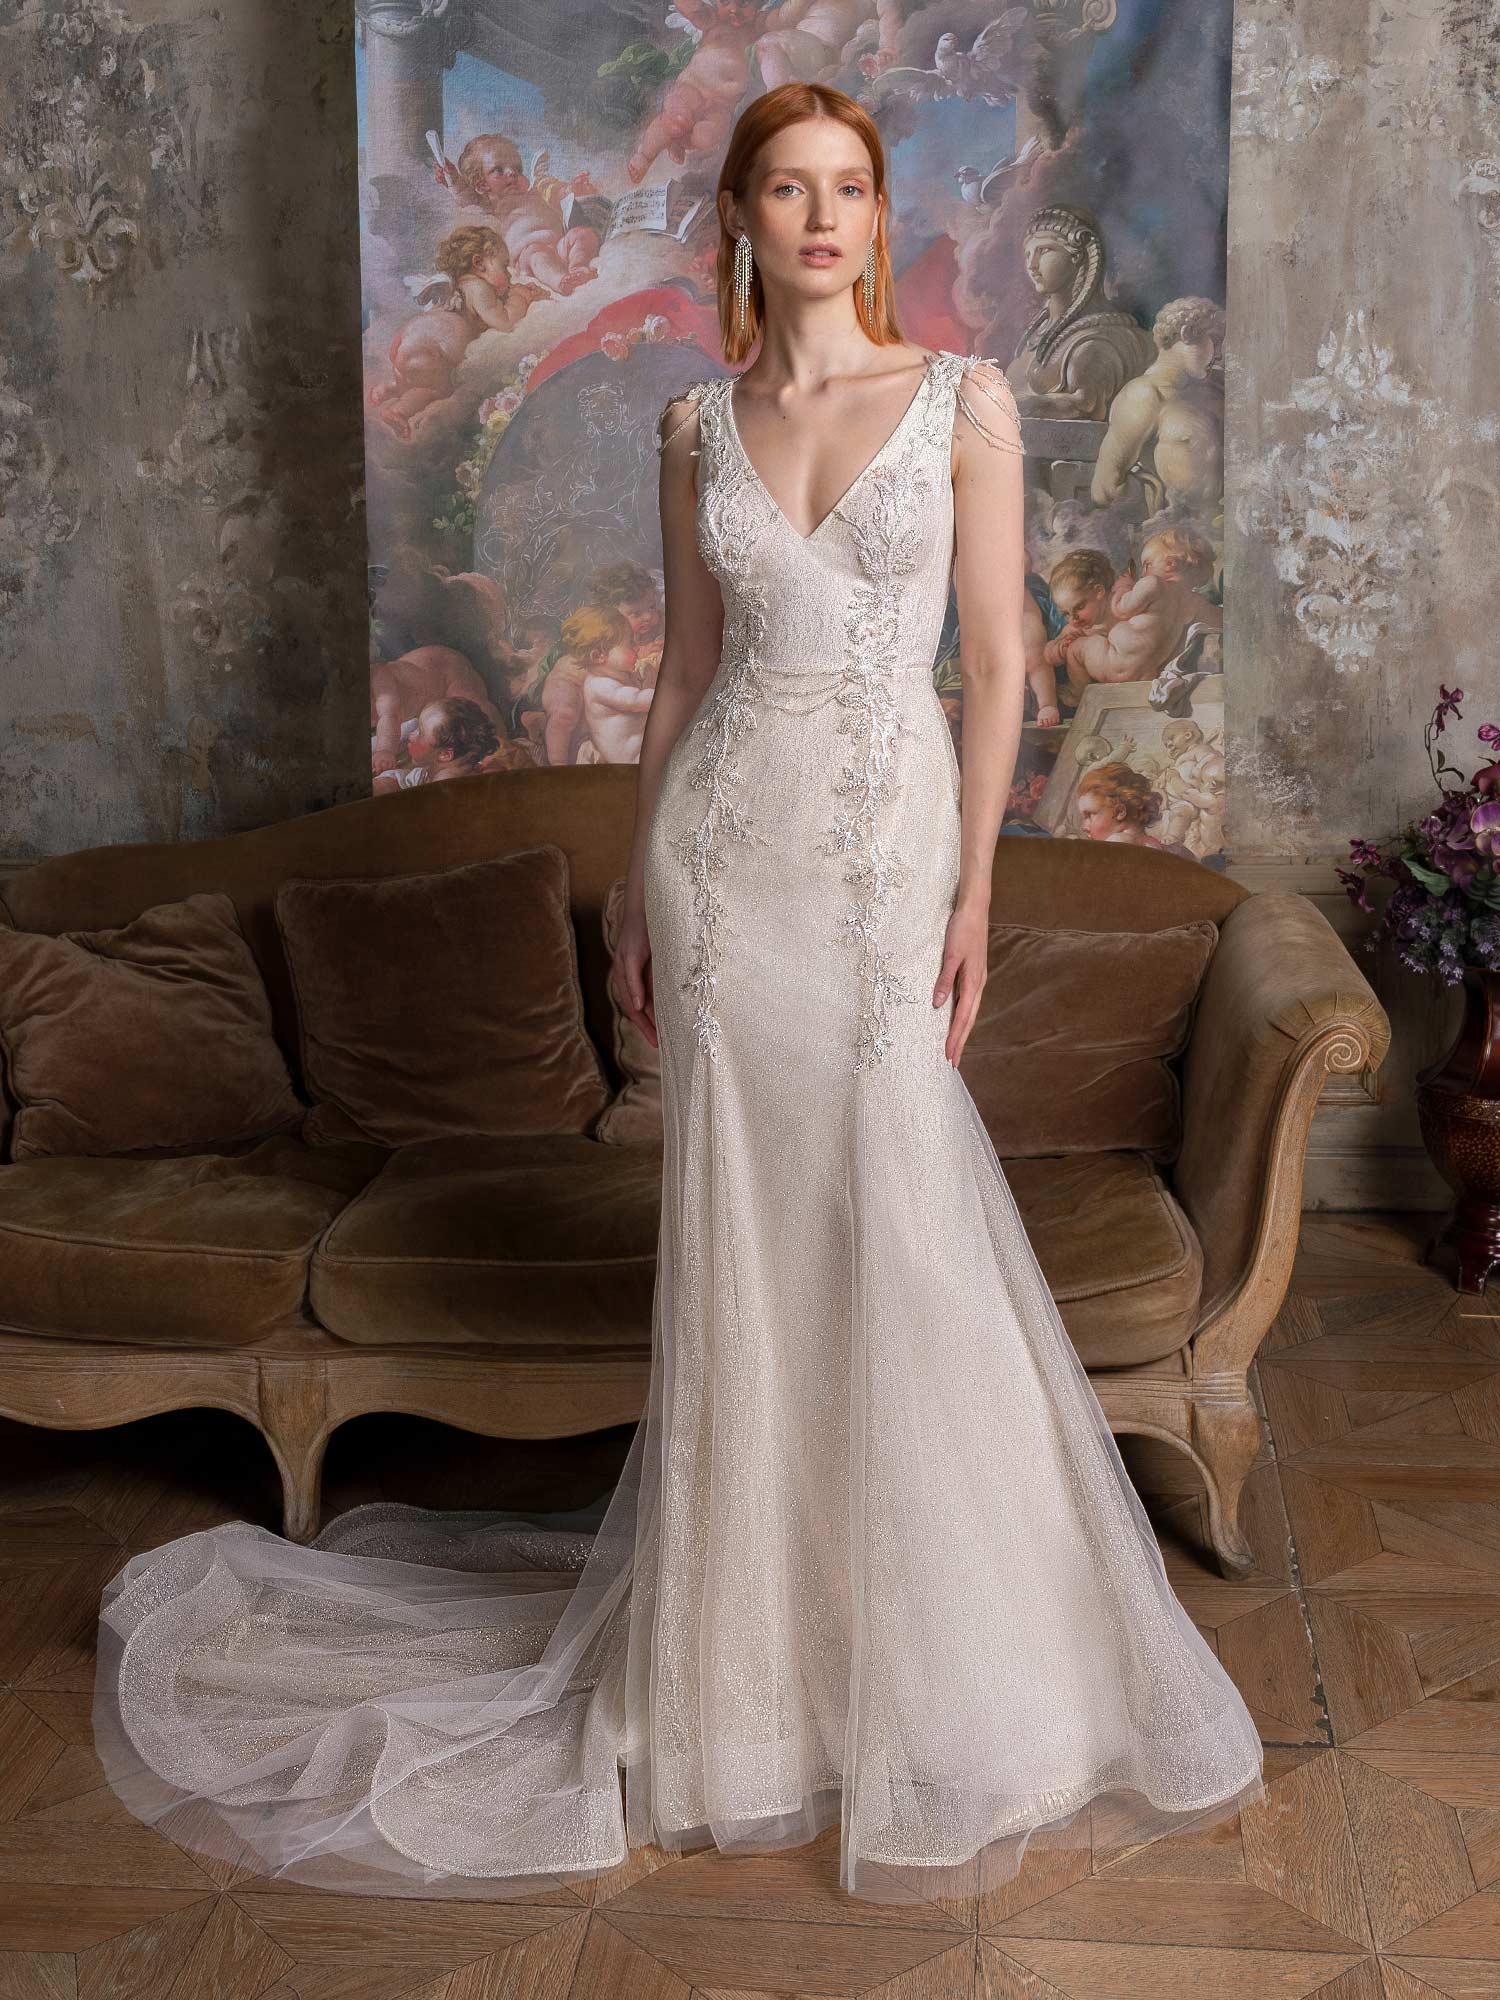 Long-sleeve sheath wedding dress with bustier style corset